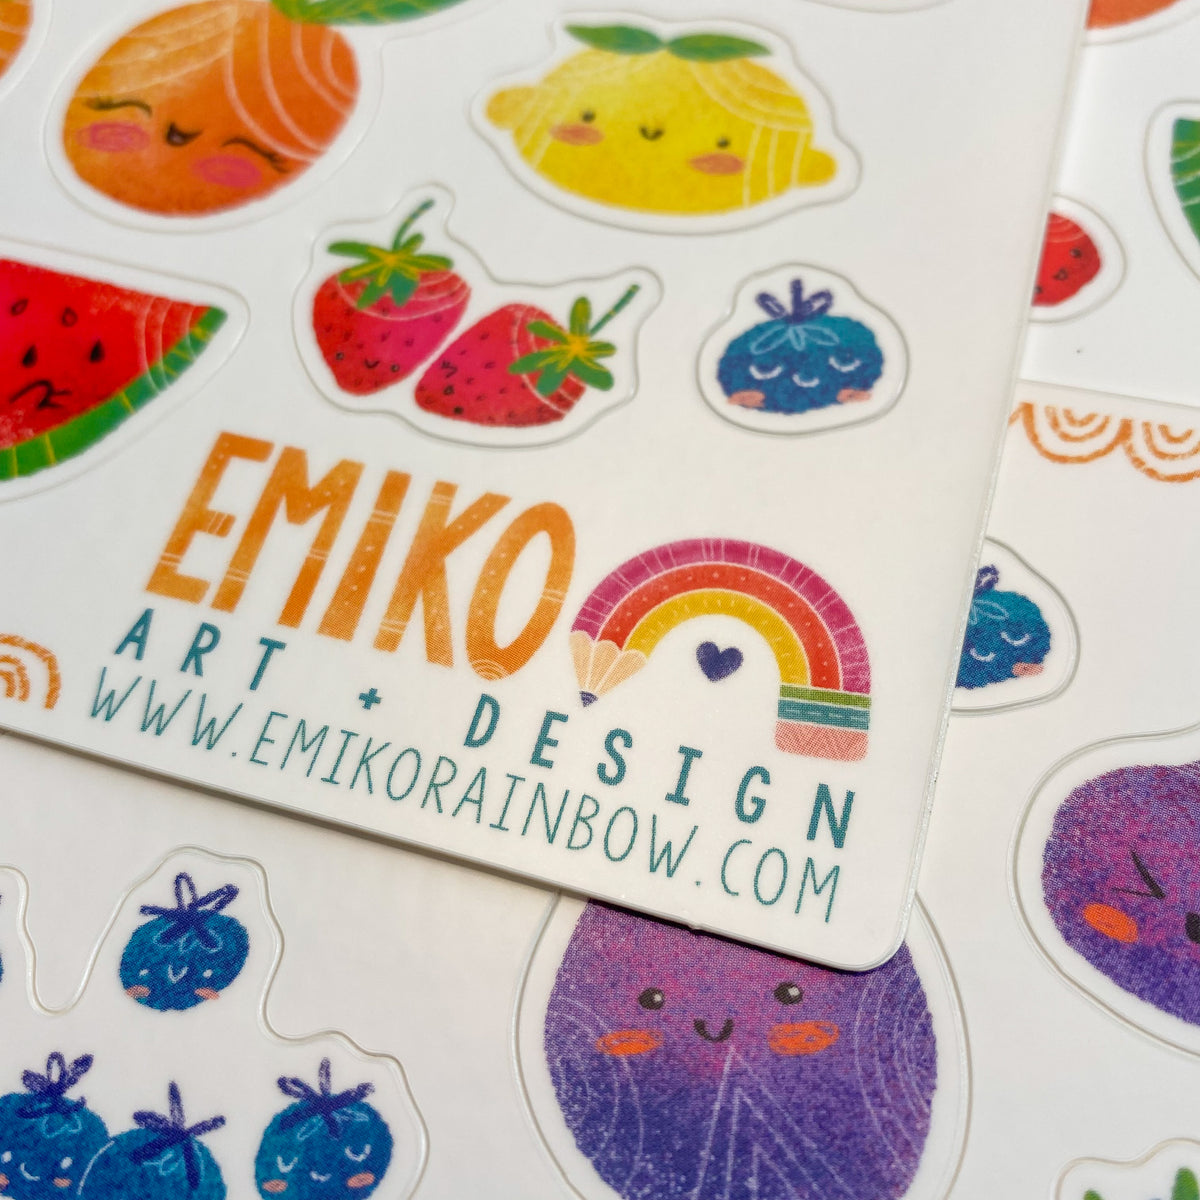 Fun Fruits and Veggies Sticker Sheet by Emiko Rainbow